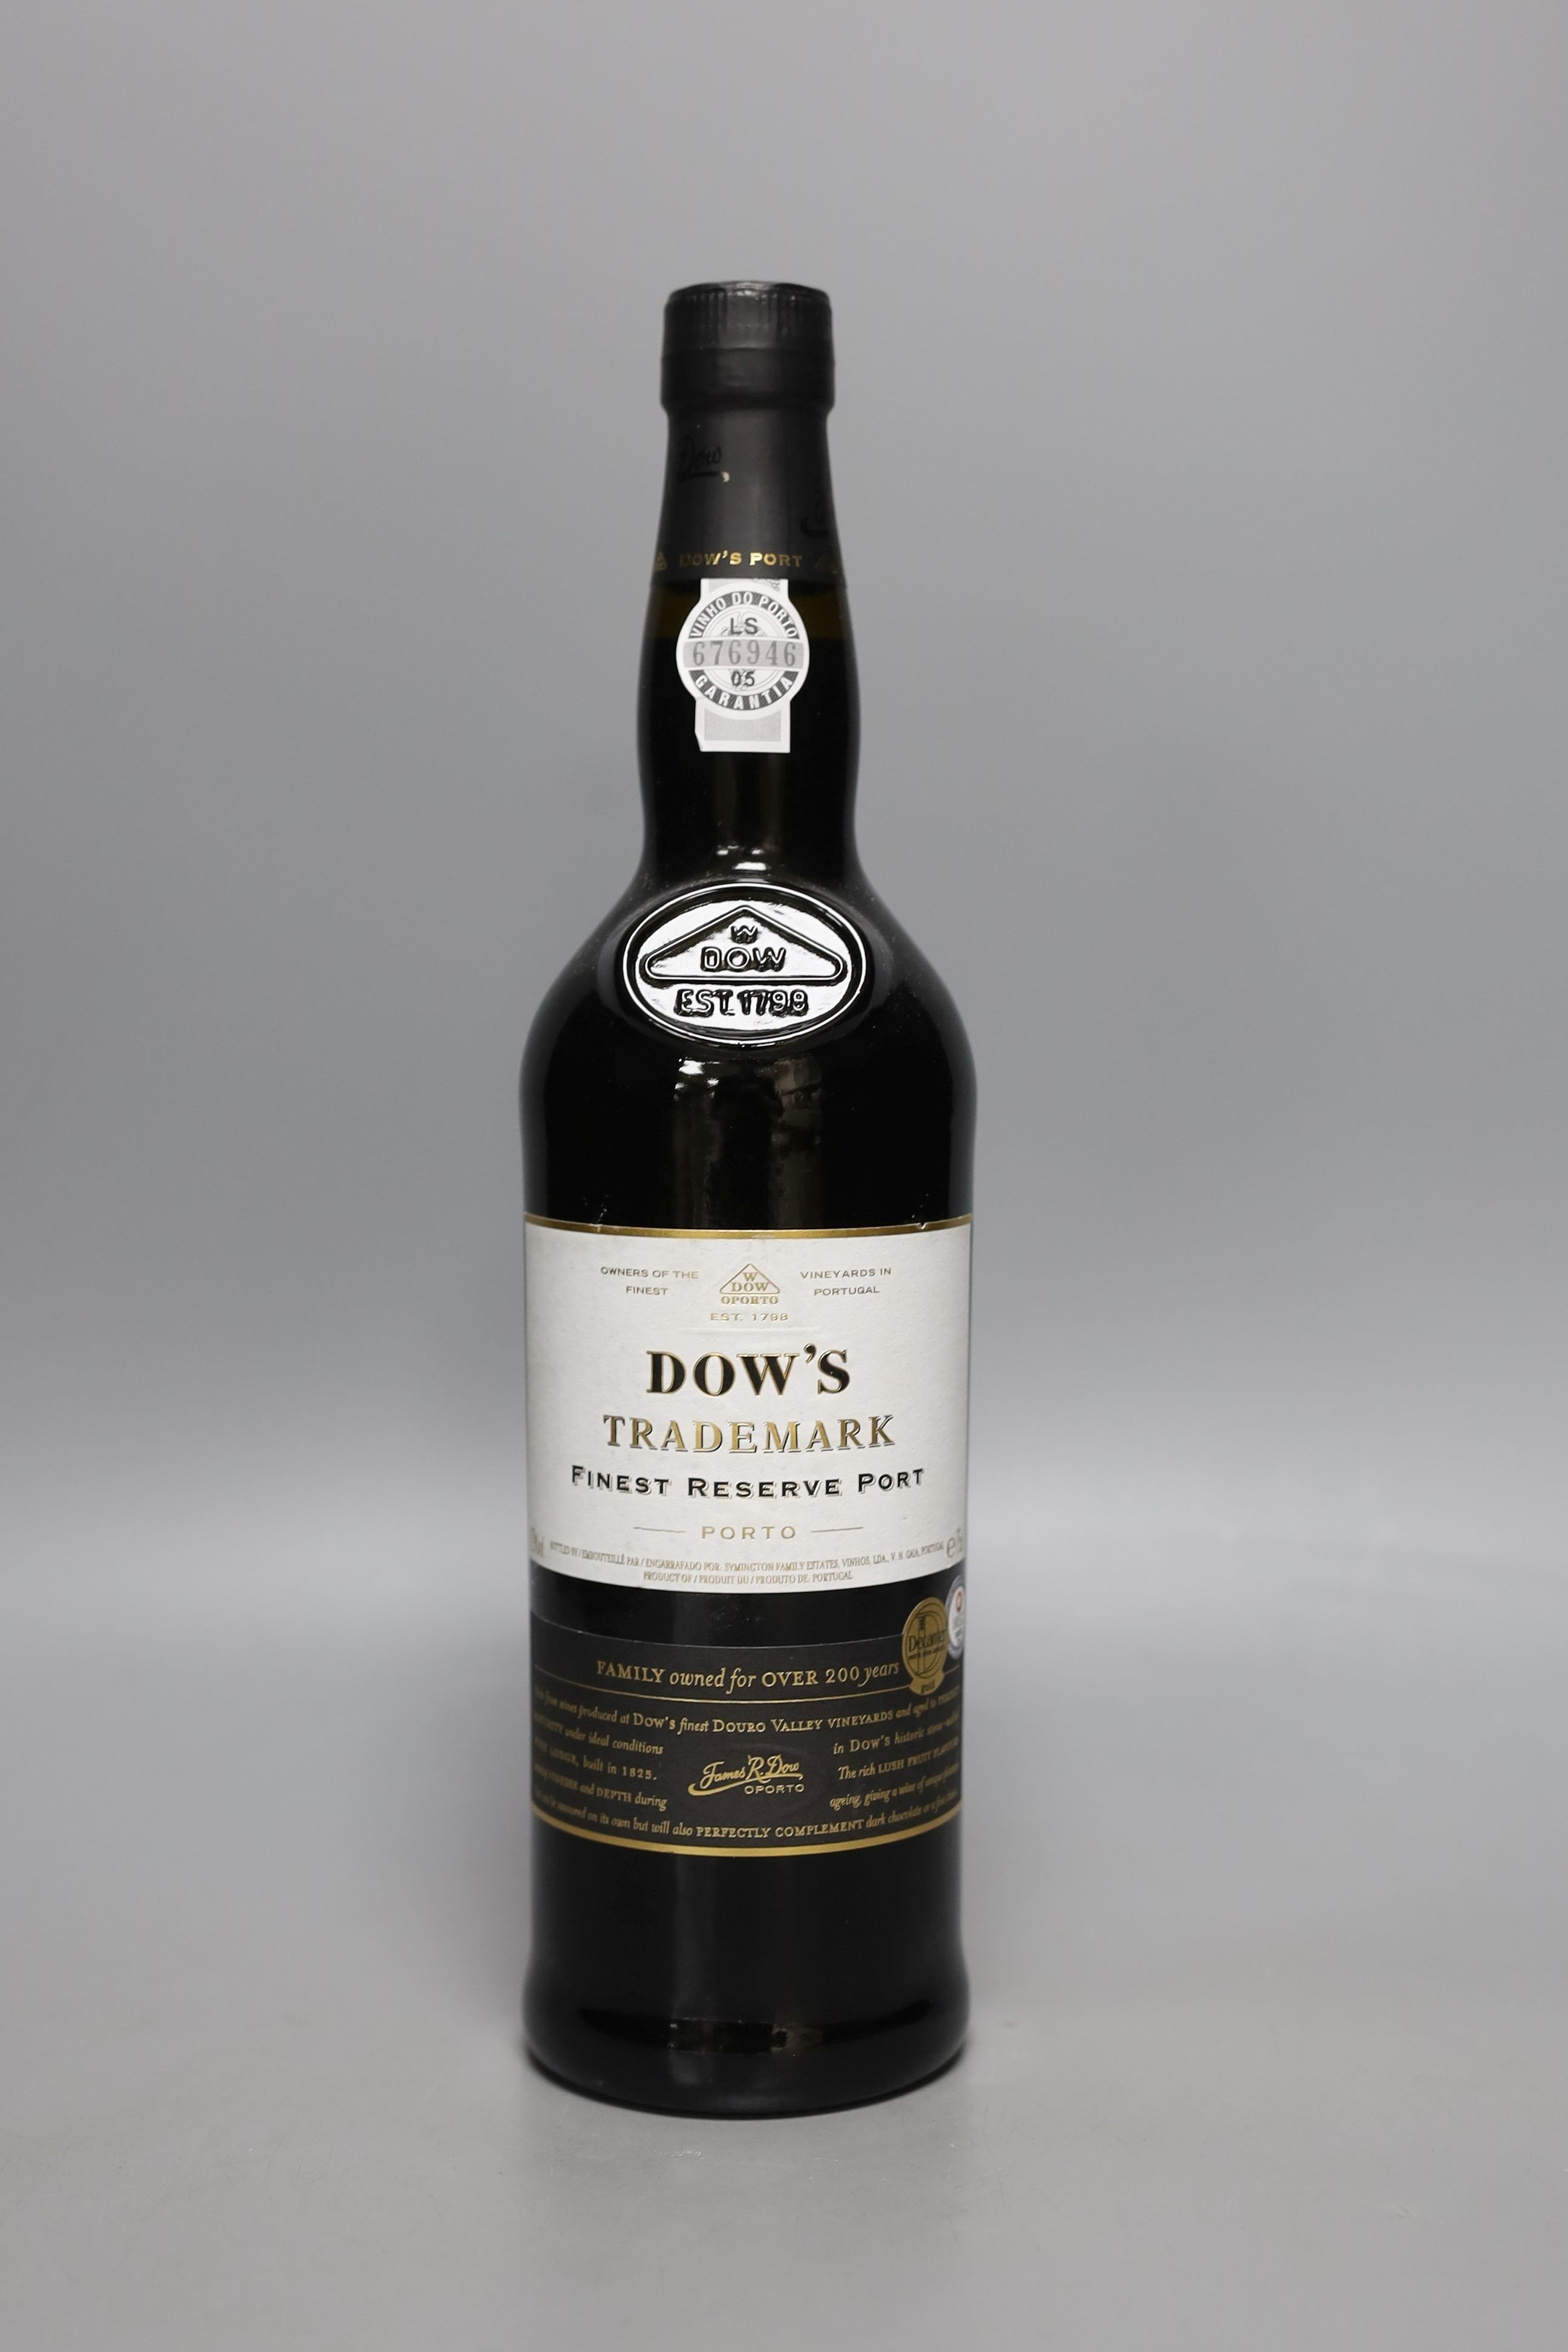 Ten 75cl bottles of Dow’s Trademark Finest Reserve Port